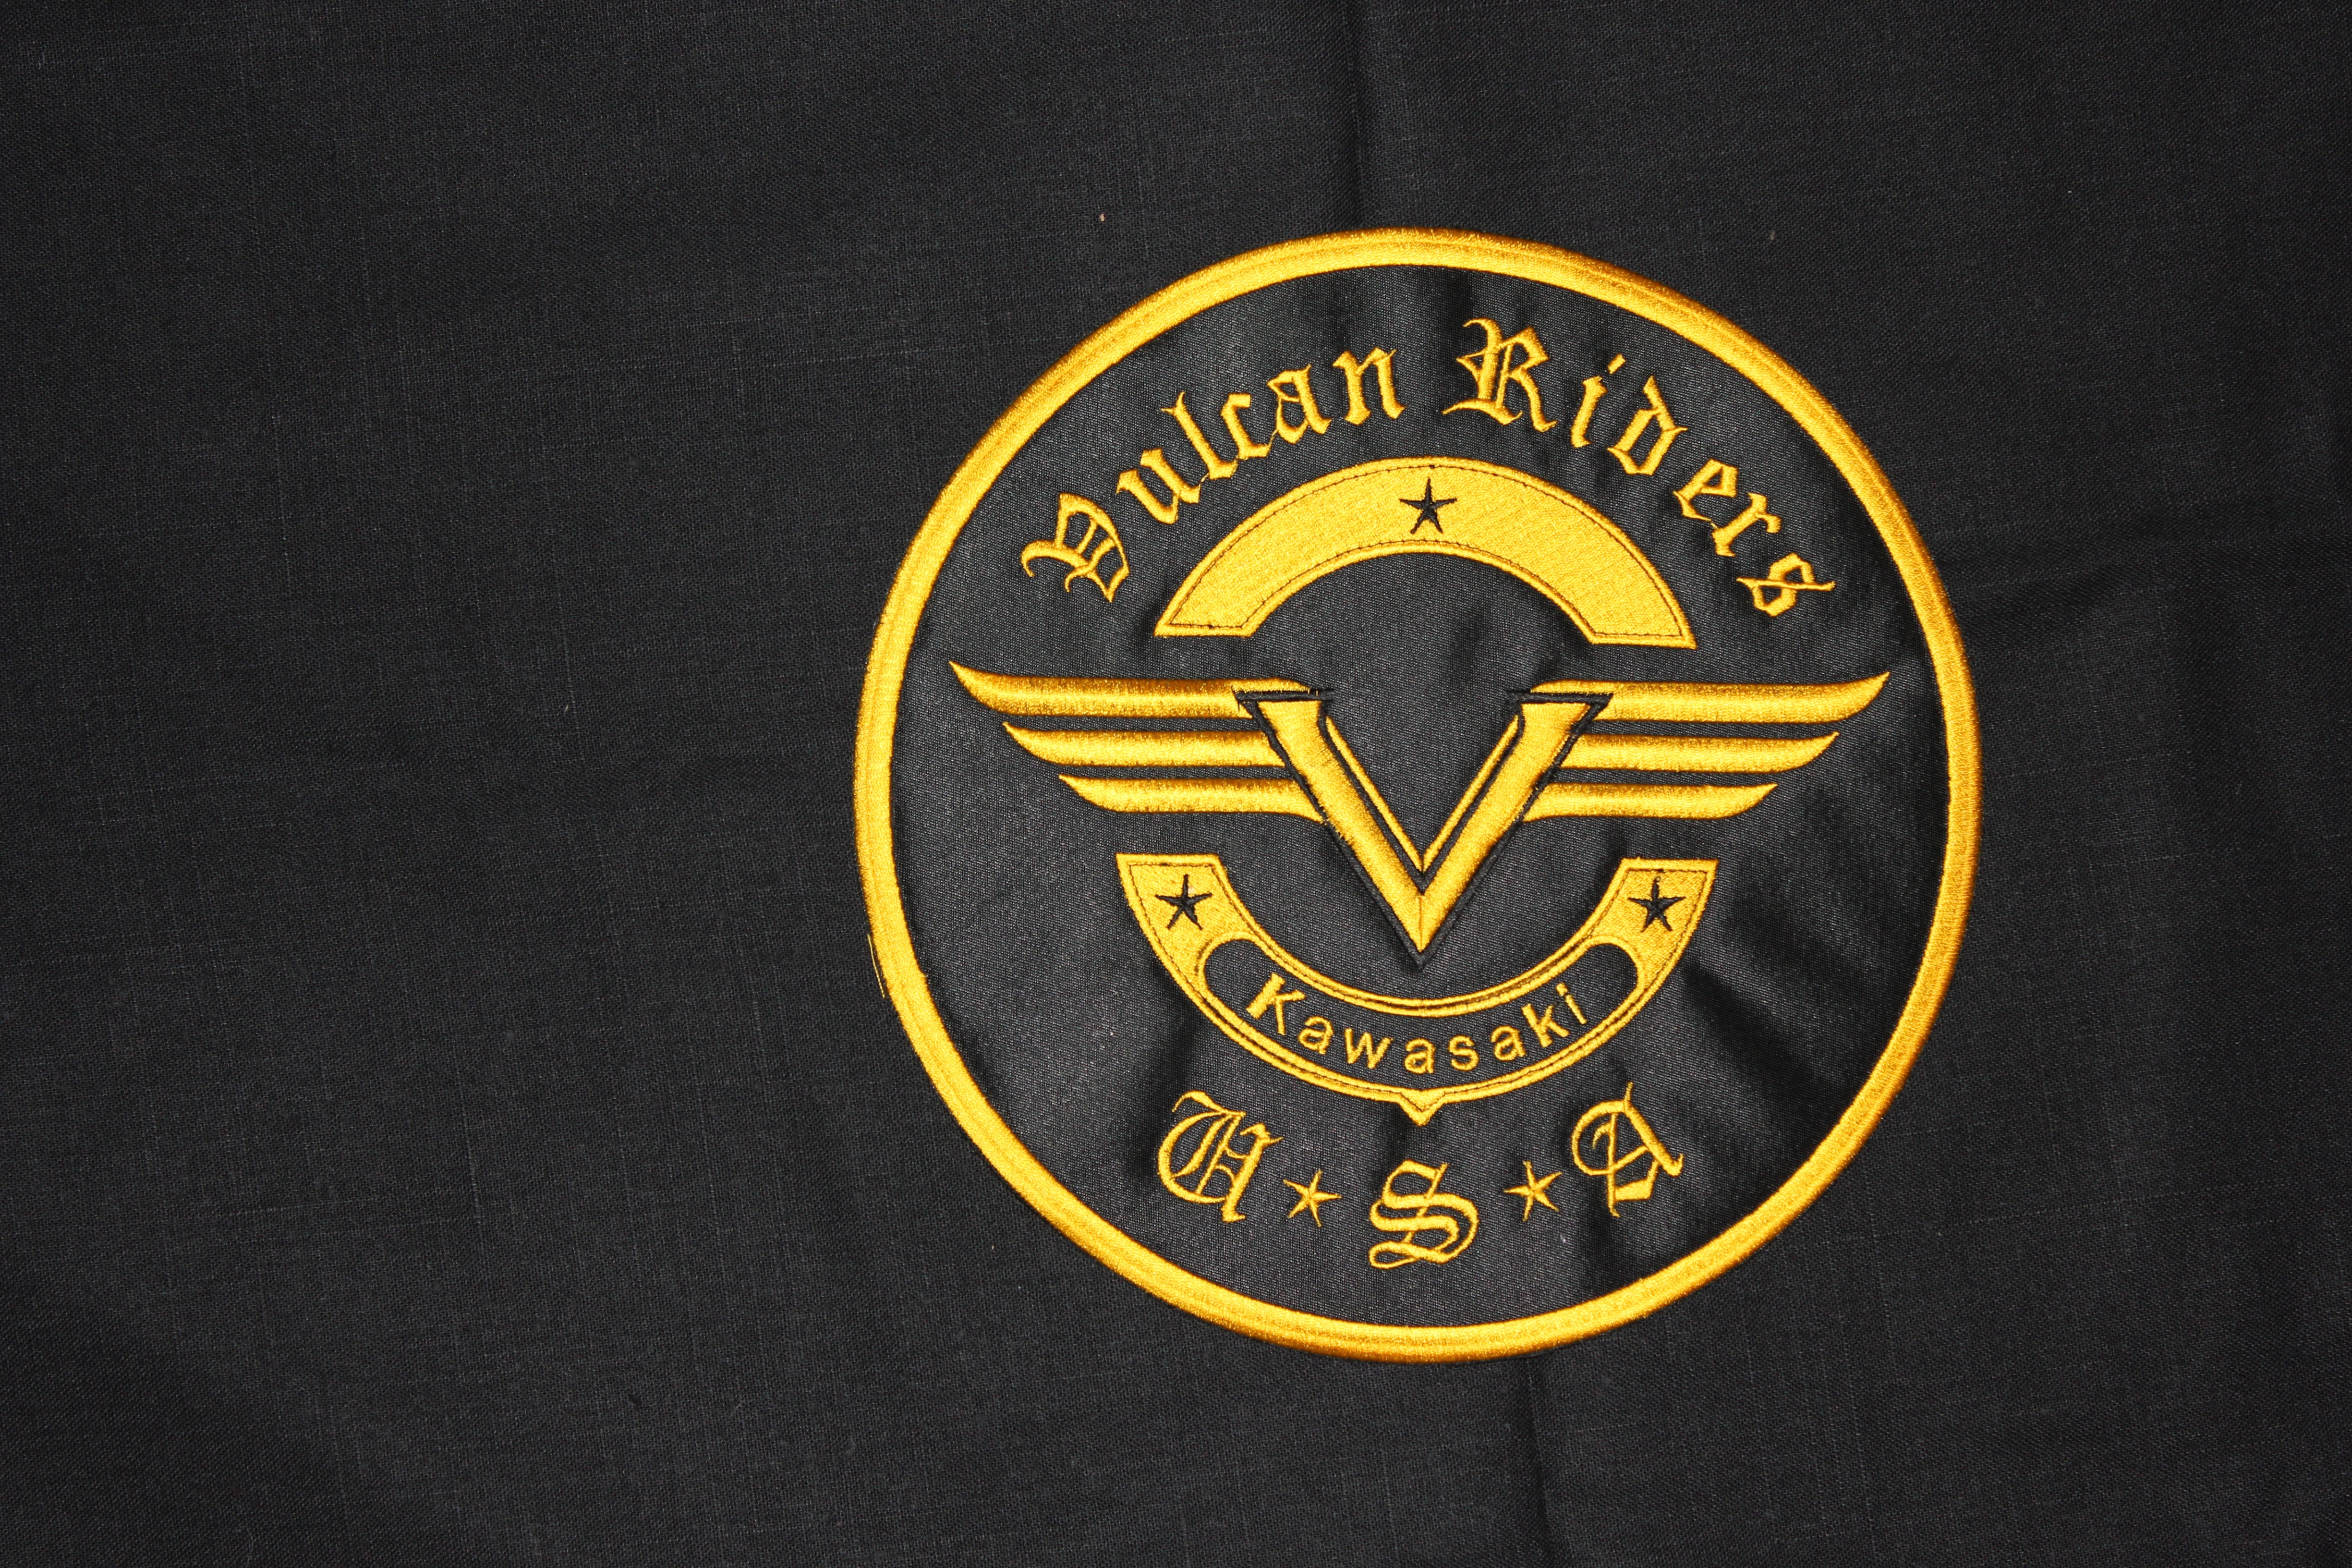 10" Vulcan Riders USA patch